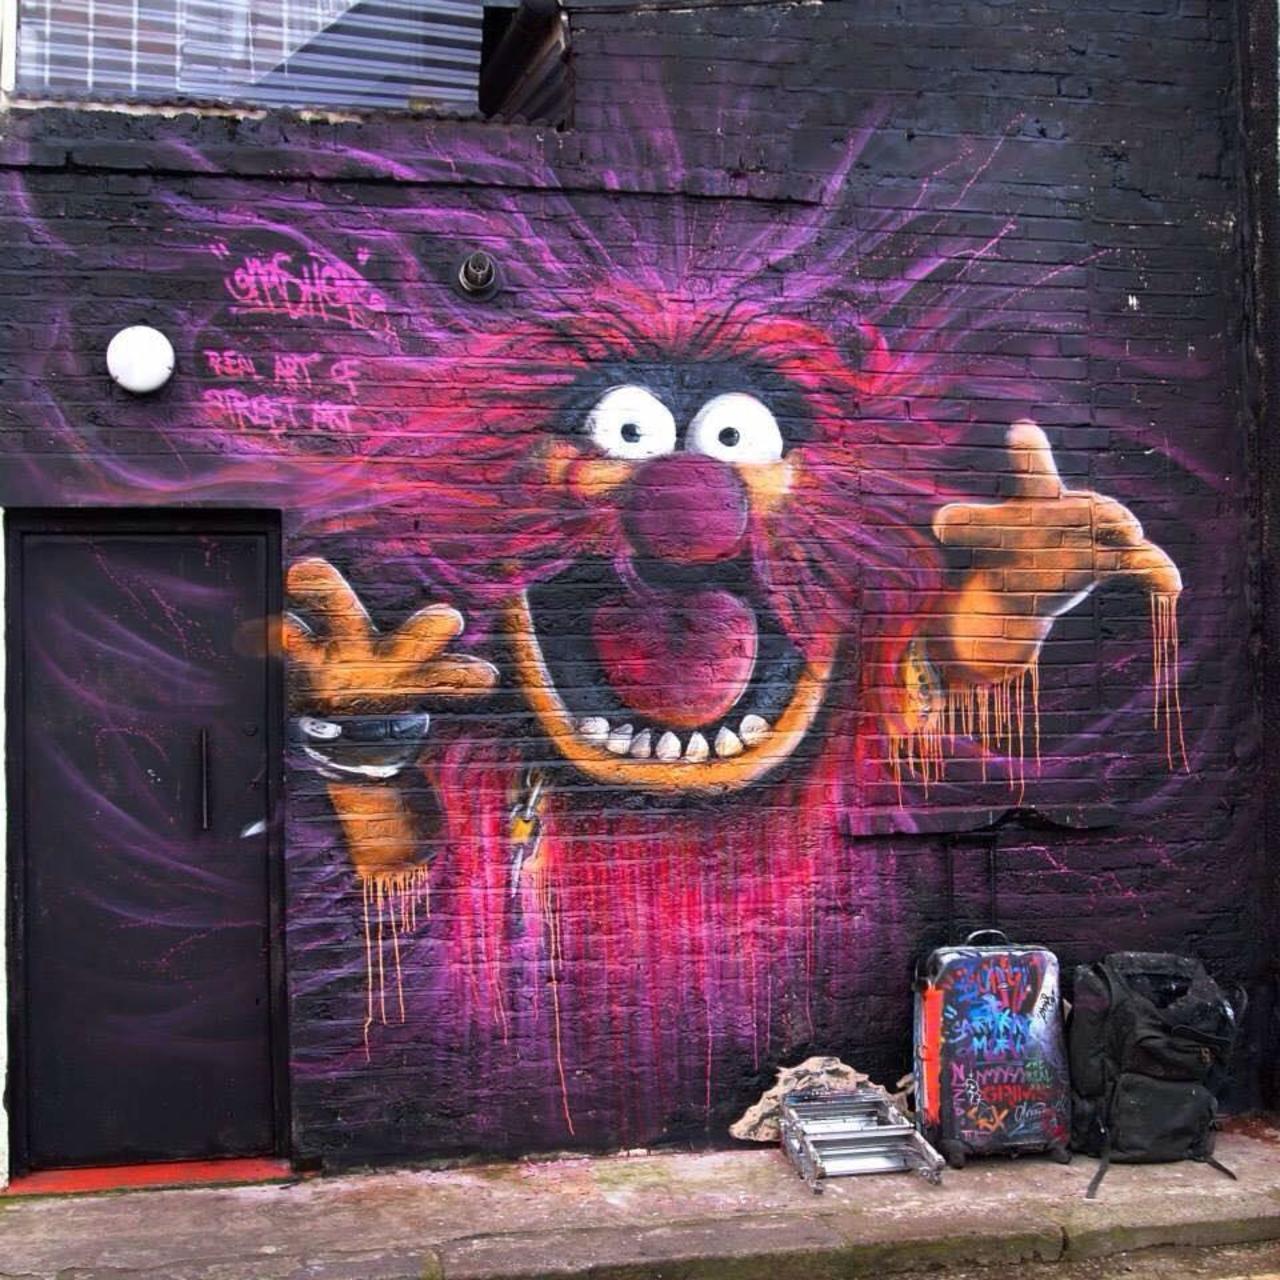 RT @HeatherGlatz: Fun Street Art of Animal by Gnasher 

#art #arte #graffiti #streetart http://t.co/sISbnwAGSQ